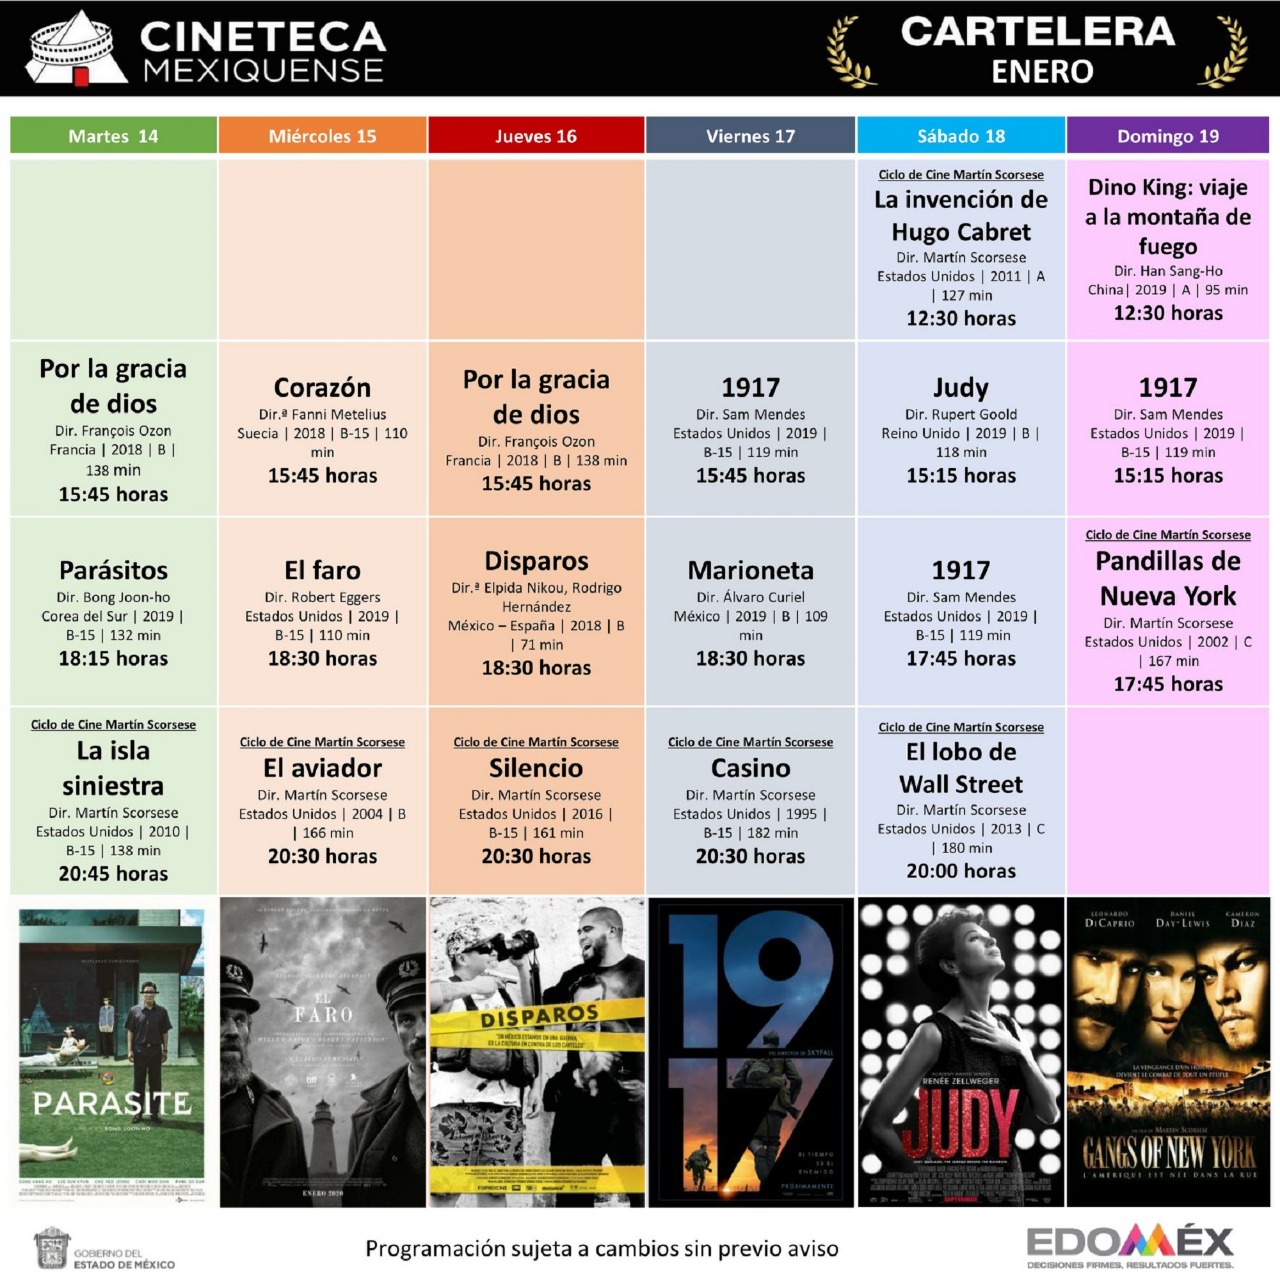 Presenta cineteca mexiquense cartelera para la tercera semana de enero